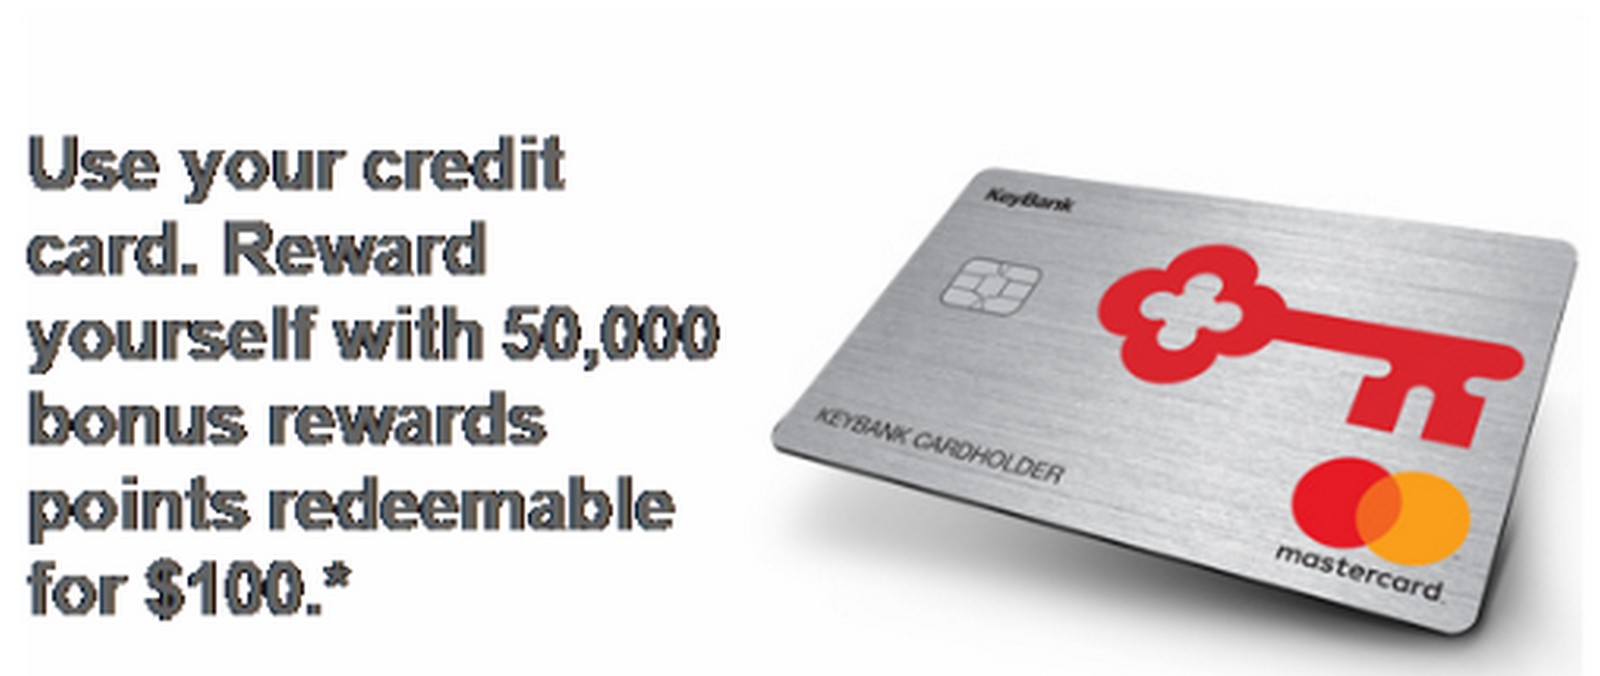 KeyBank Rewards credit card